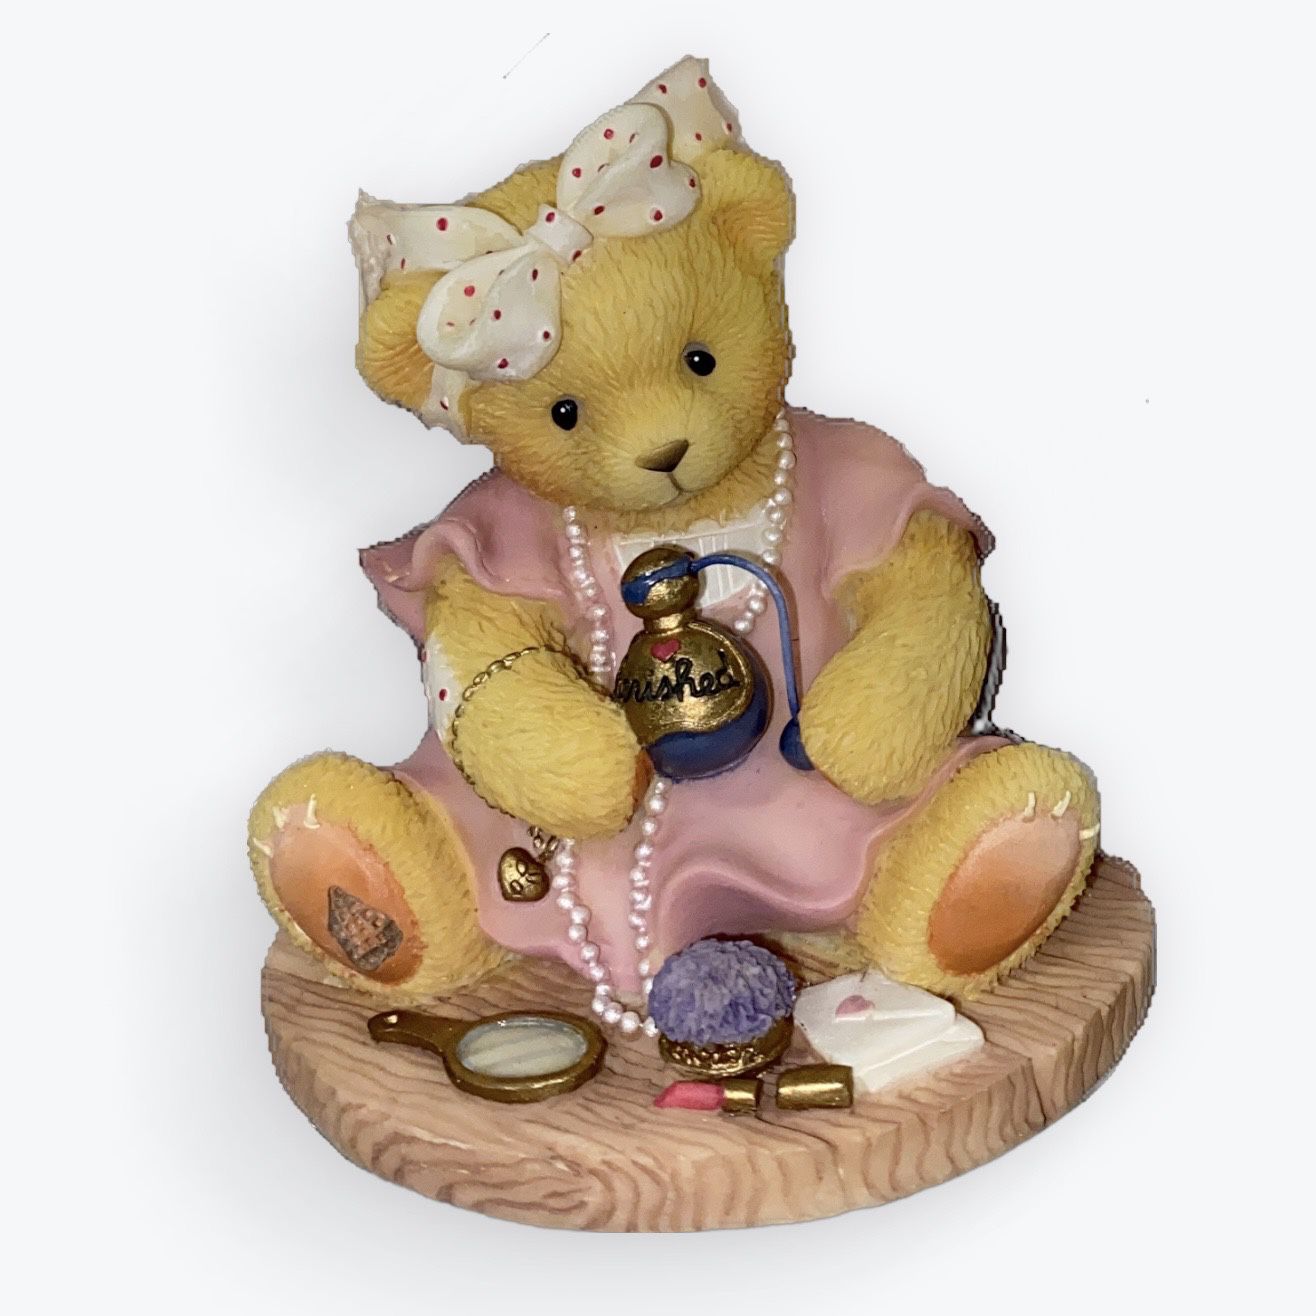 Cherished Teddies “You make me feel beautiful inside” Ava Bear With perfume Bottle Figurine